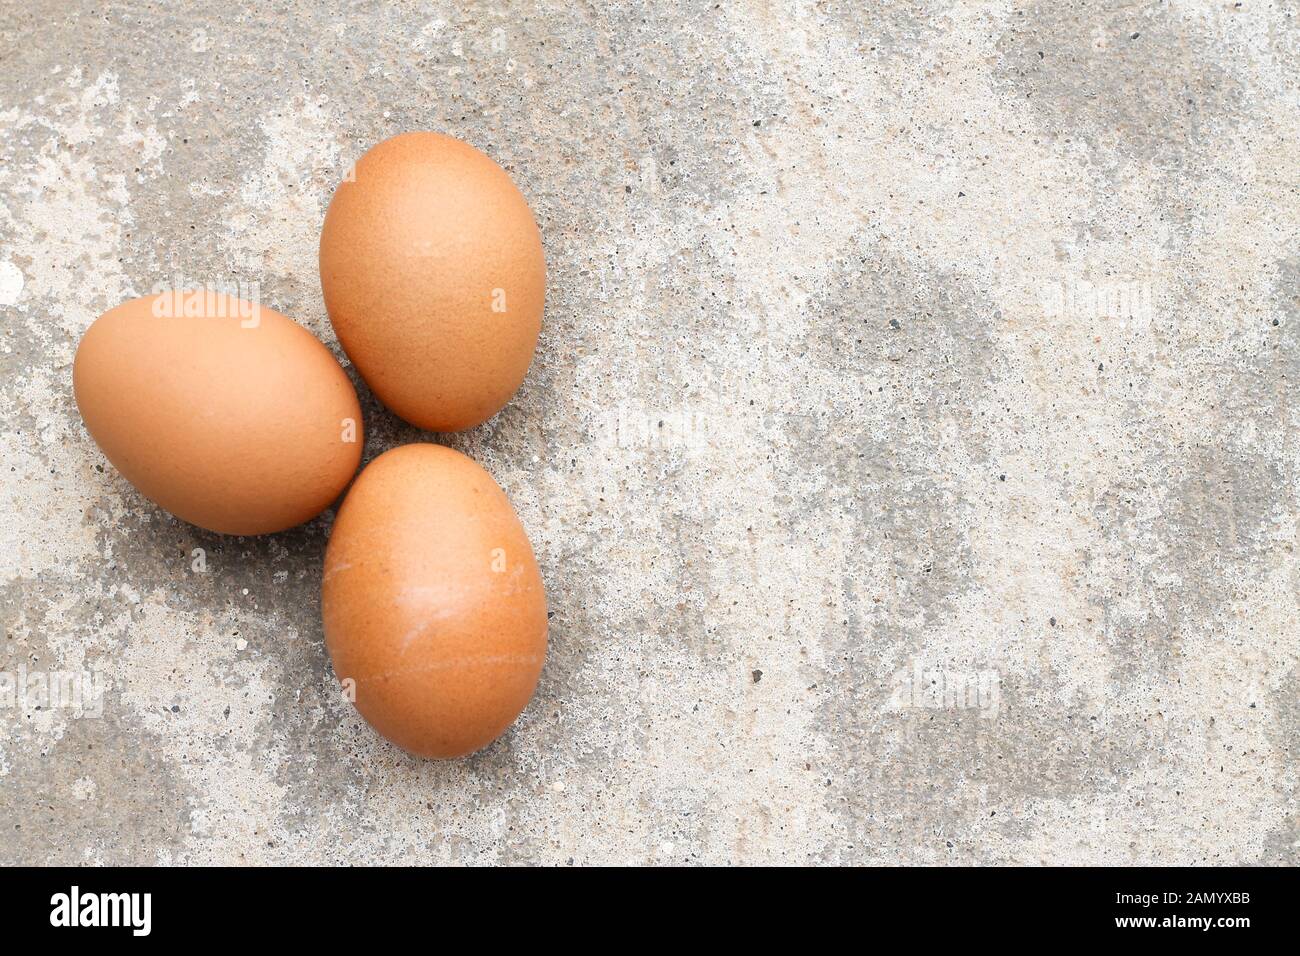 Top view three brown eggs on concrete. Stock Photo